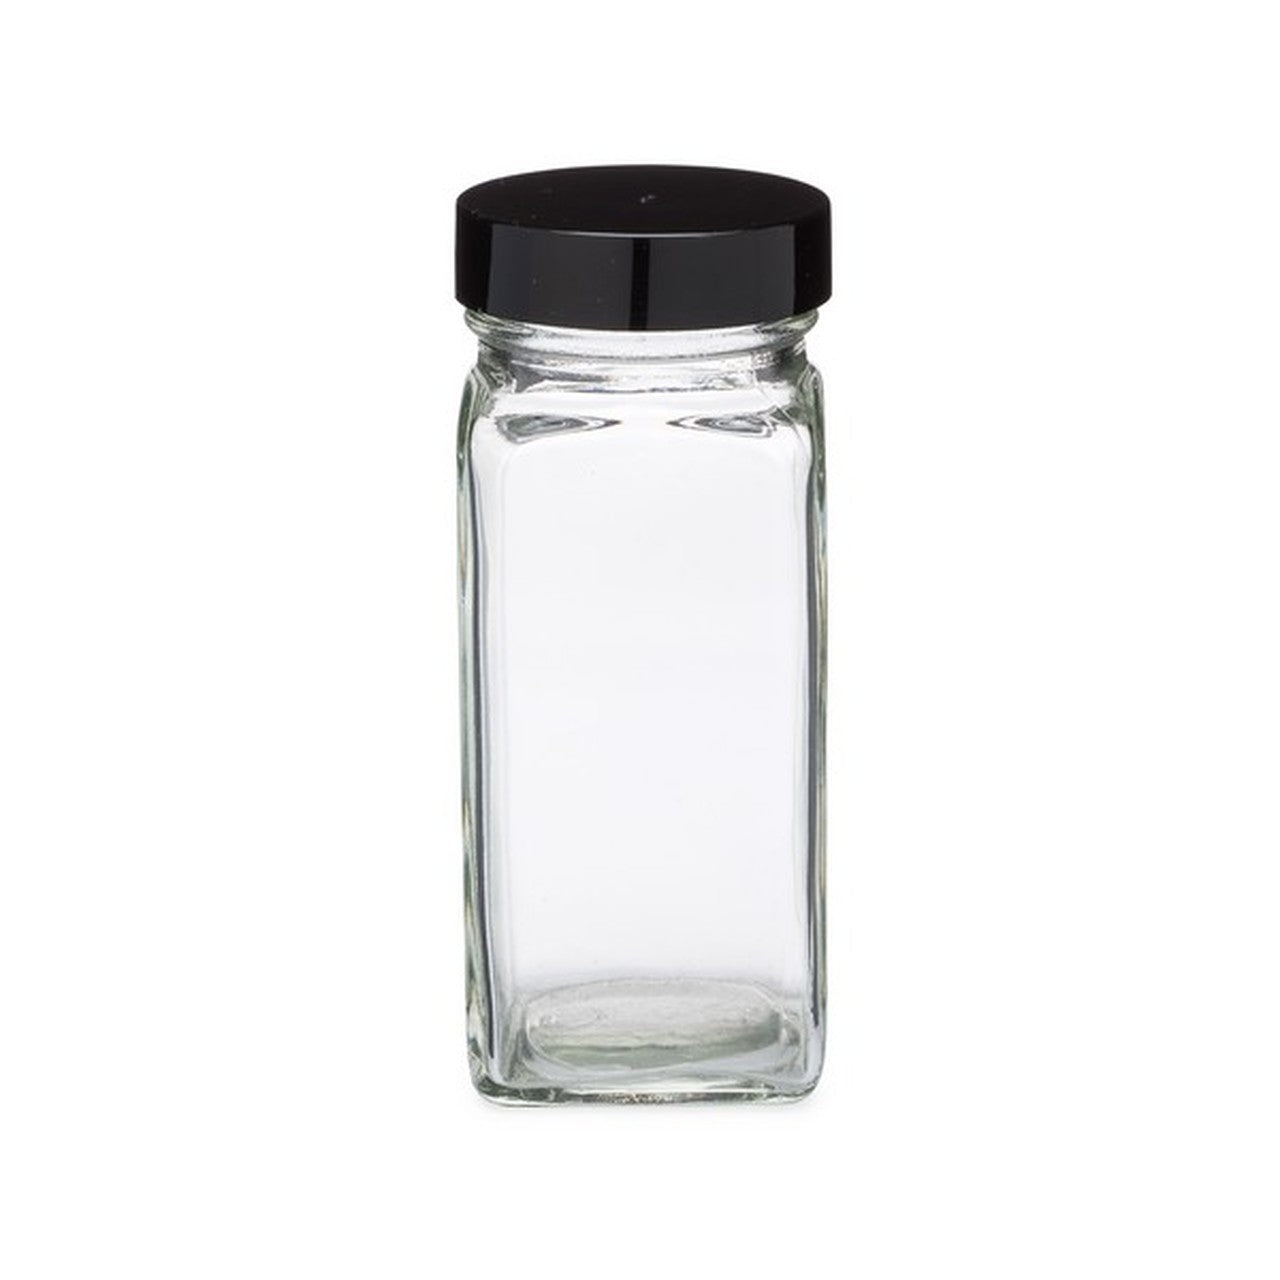 Spice Bottles Empty Glass with Labels 4 oz - Spice Jars, Spice